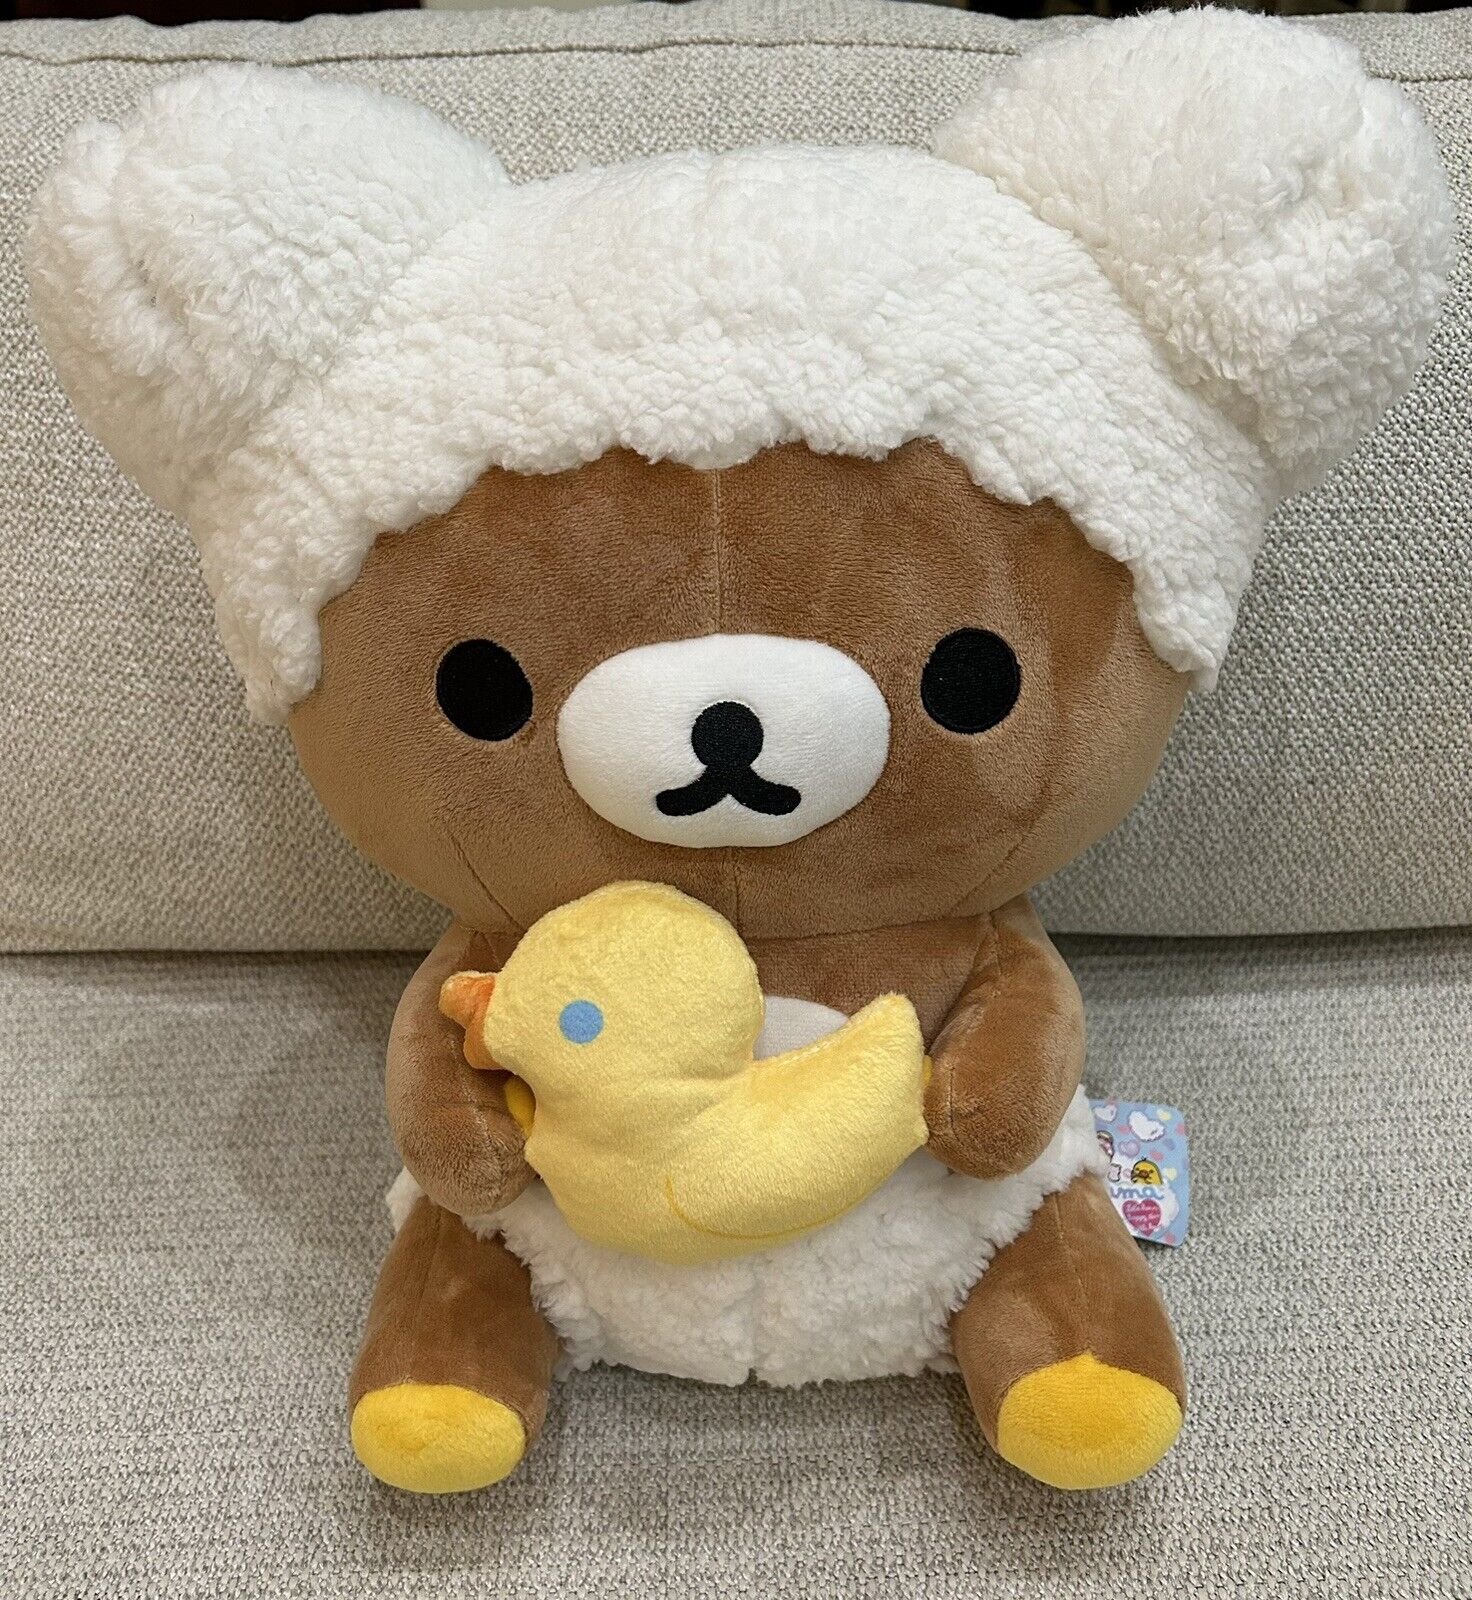 San-X Rilakkuma Bathtime With Duck Plush 14” Large Stuffed Animal Teddy Bear NWT